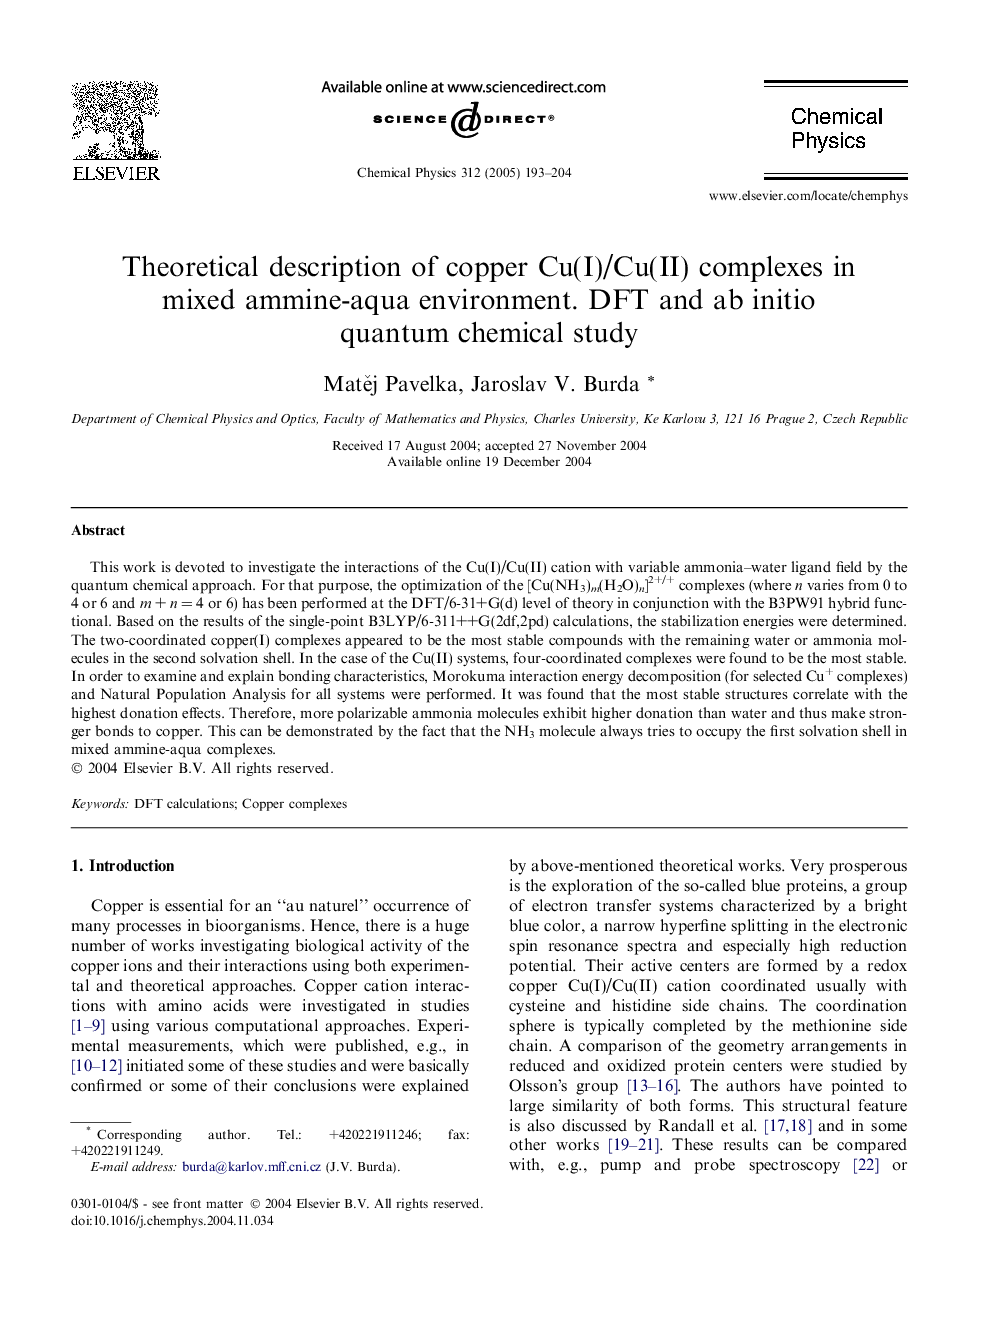 Theoretical description of copper Cu(I)/Cu(II) complexes in mixed ammine-aqua environment. DFT and ab initio quantum chemical study